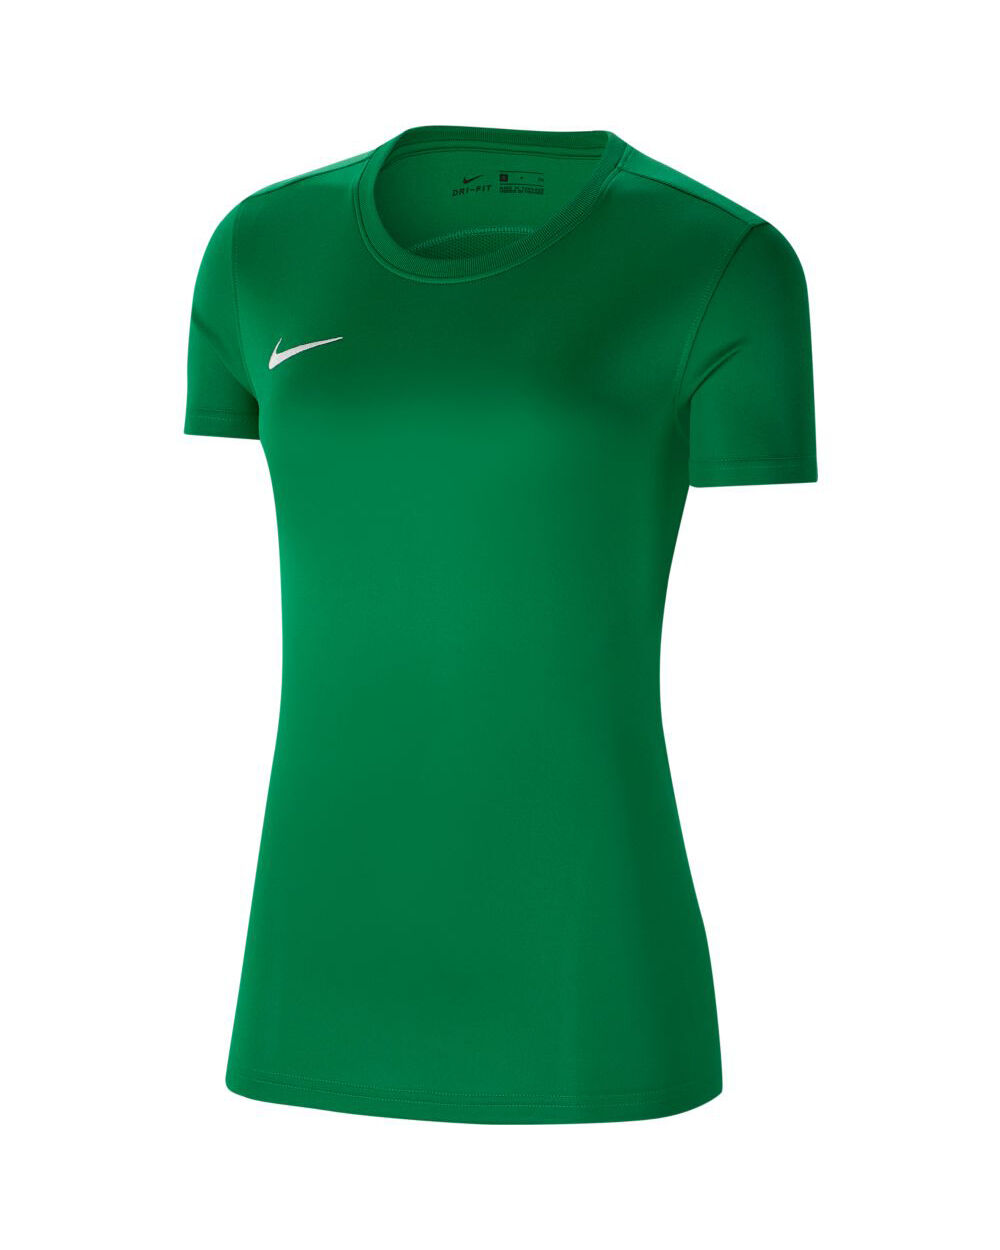 Camiseta Nike Park VII Verde para Mujeres - BV6728-341